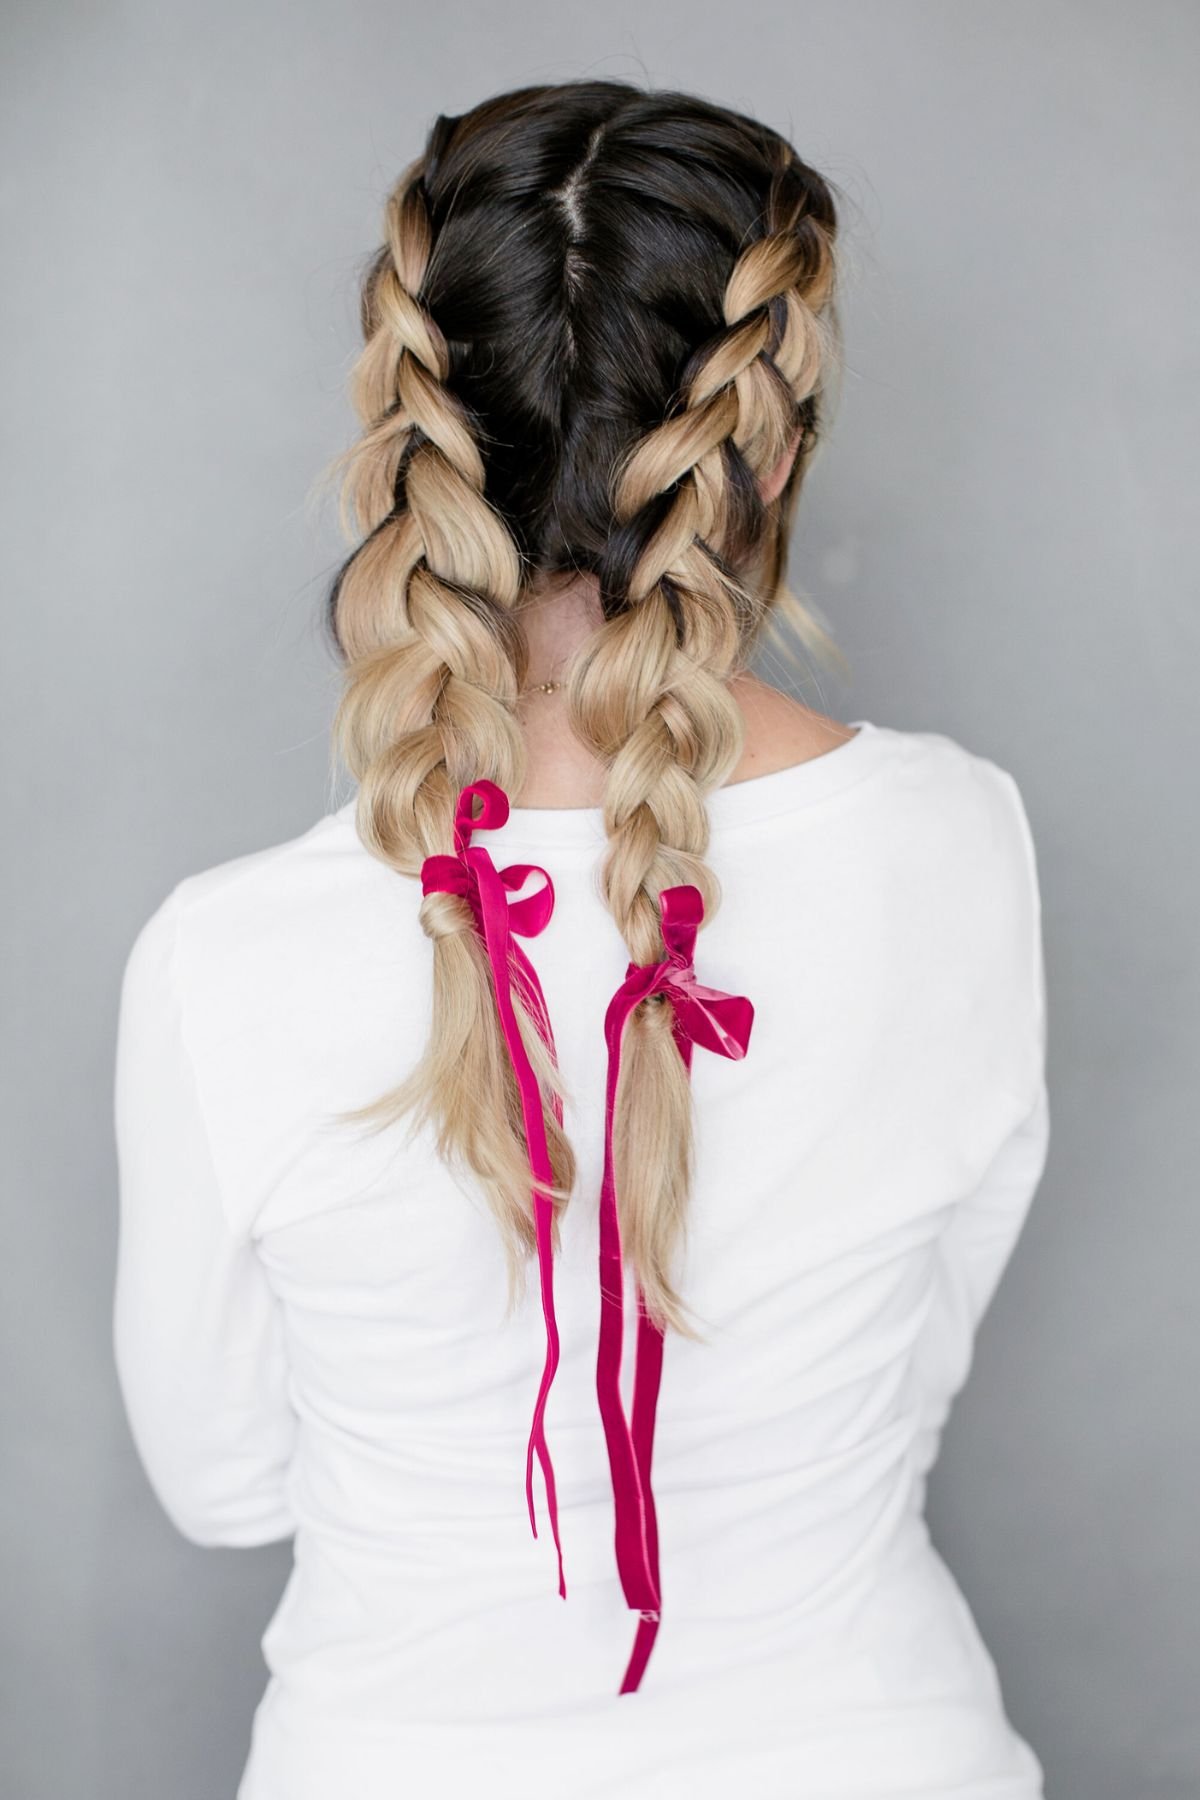 Spirit Ribbons Hair Bow Tutorial - Uncommon Designs